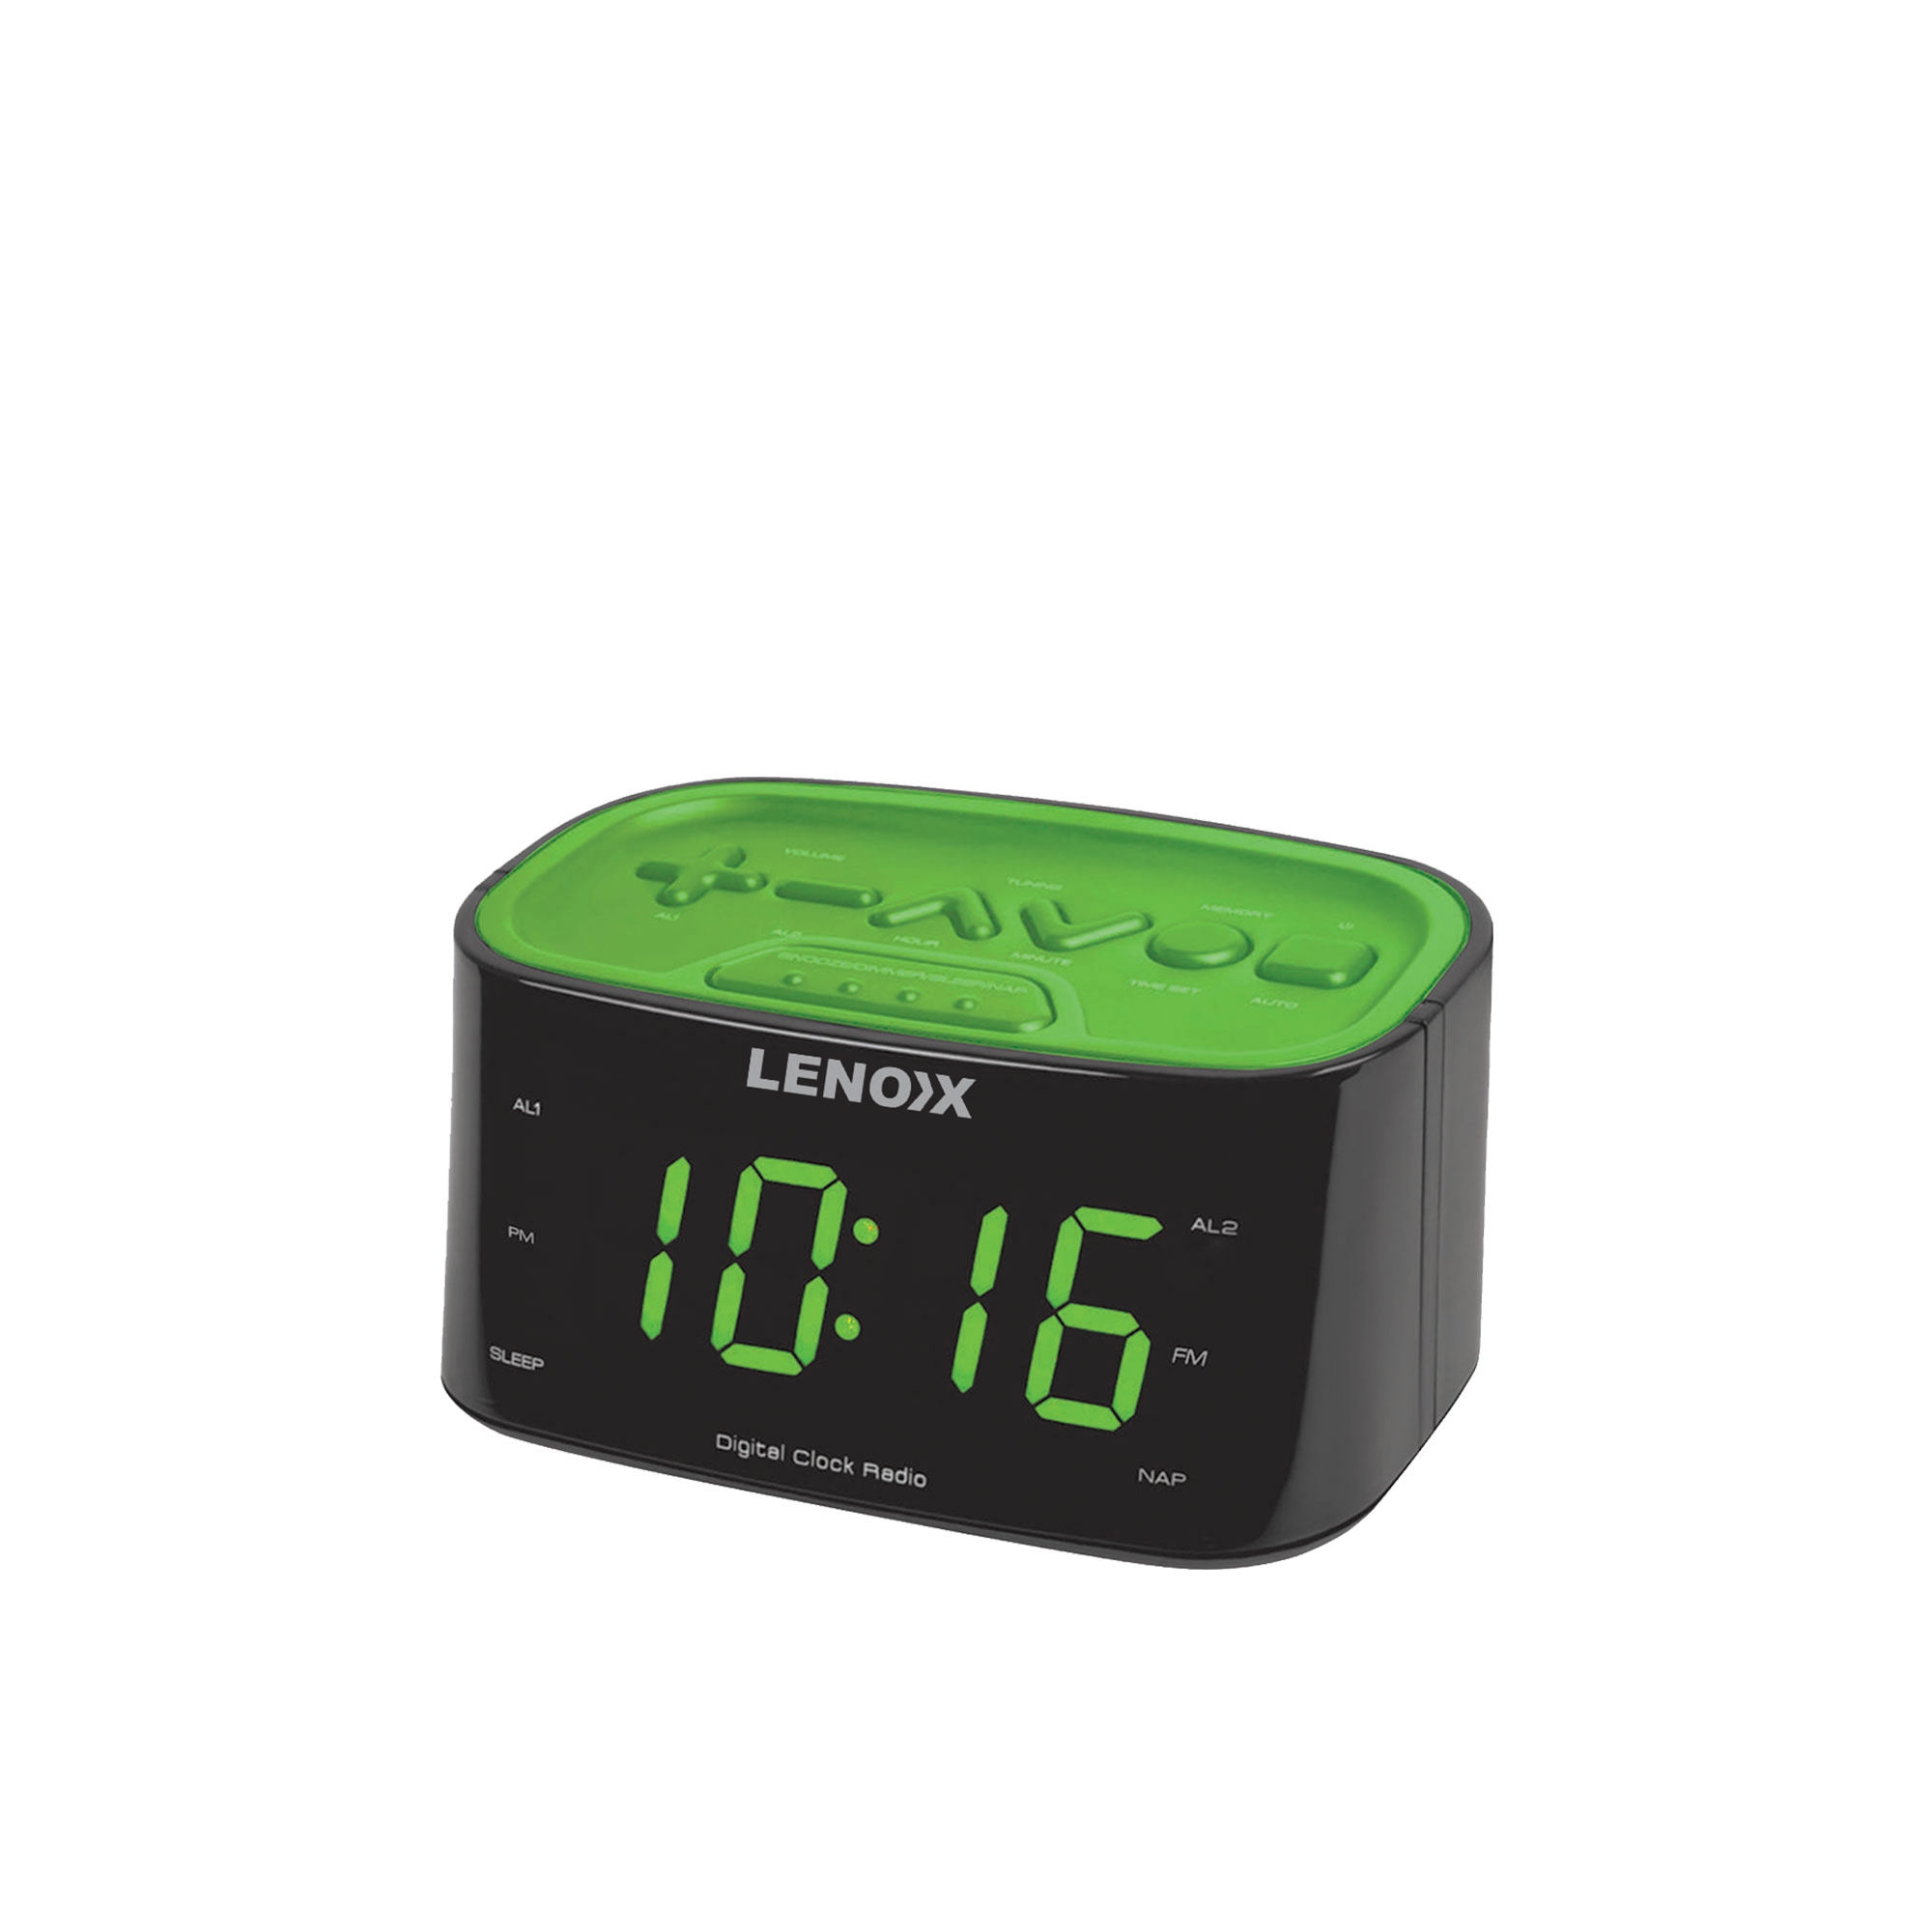 Lenoxx FM Radio Dual Alarm Clock with USB Charging Port Black/Green Image 1